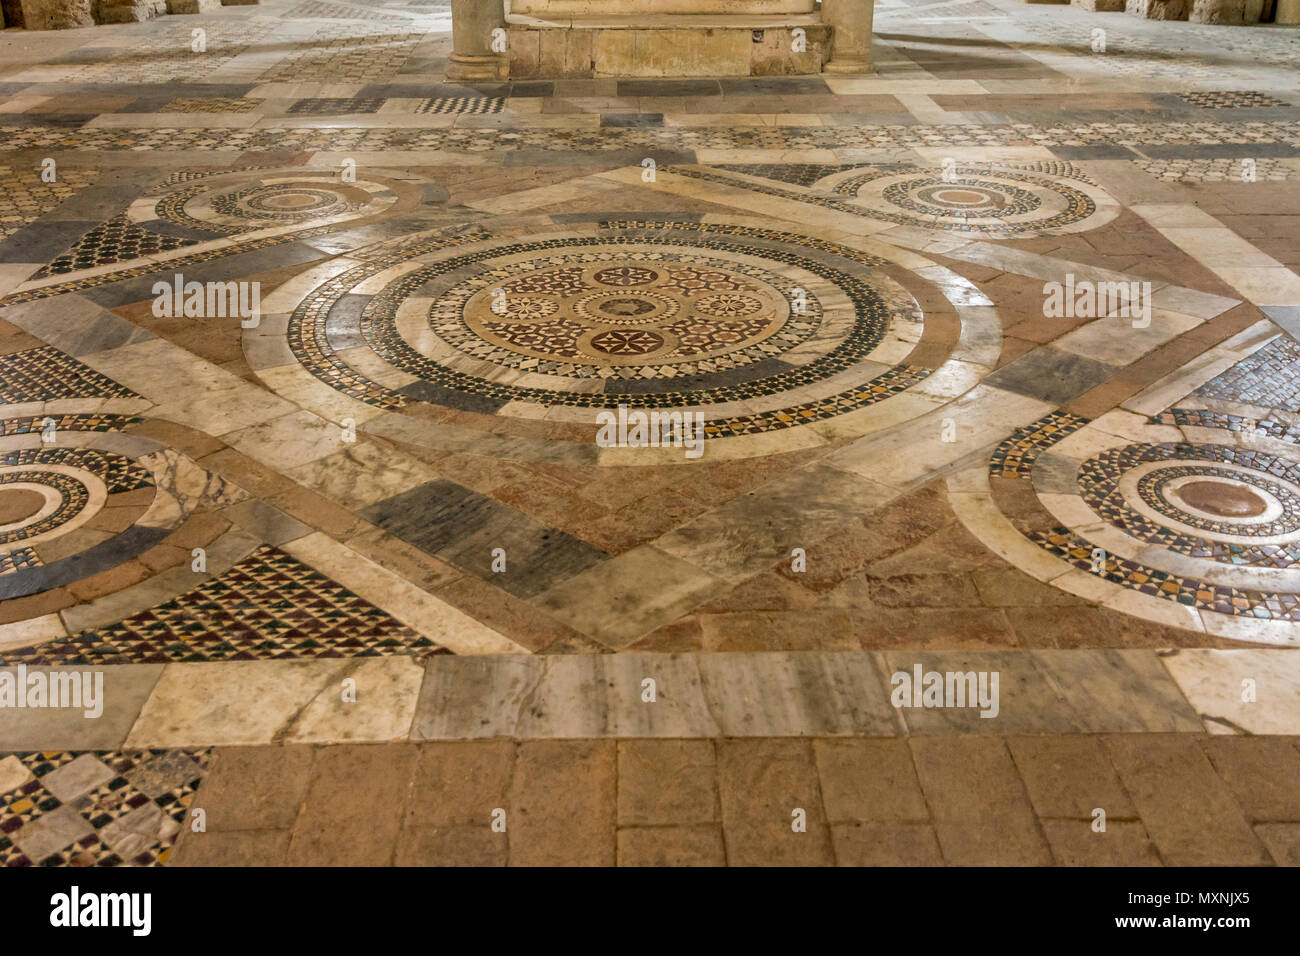 Tuscania (Viterbo), Italy  Interior of San Pietro Church, details of the Cosmatesque Pavements with geometric decorativ inlay-Italy, Lazio region Stock Photo